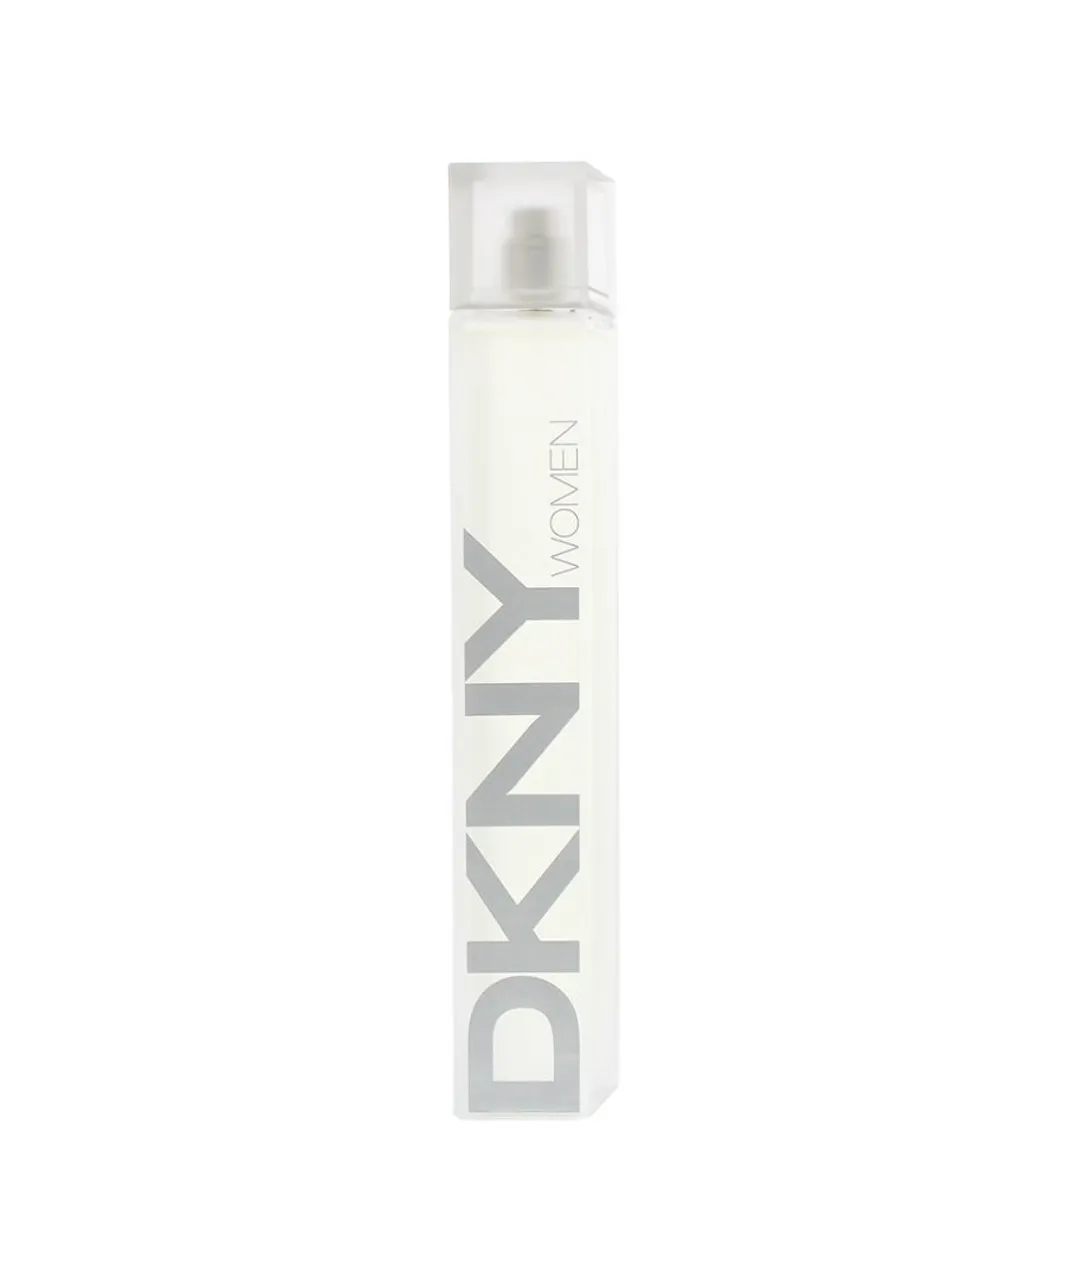 DKNY Womens Women Energizing Eau de Parfum 100ml Spray For Her - Green - One Size